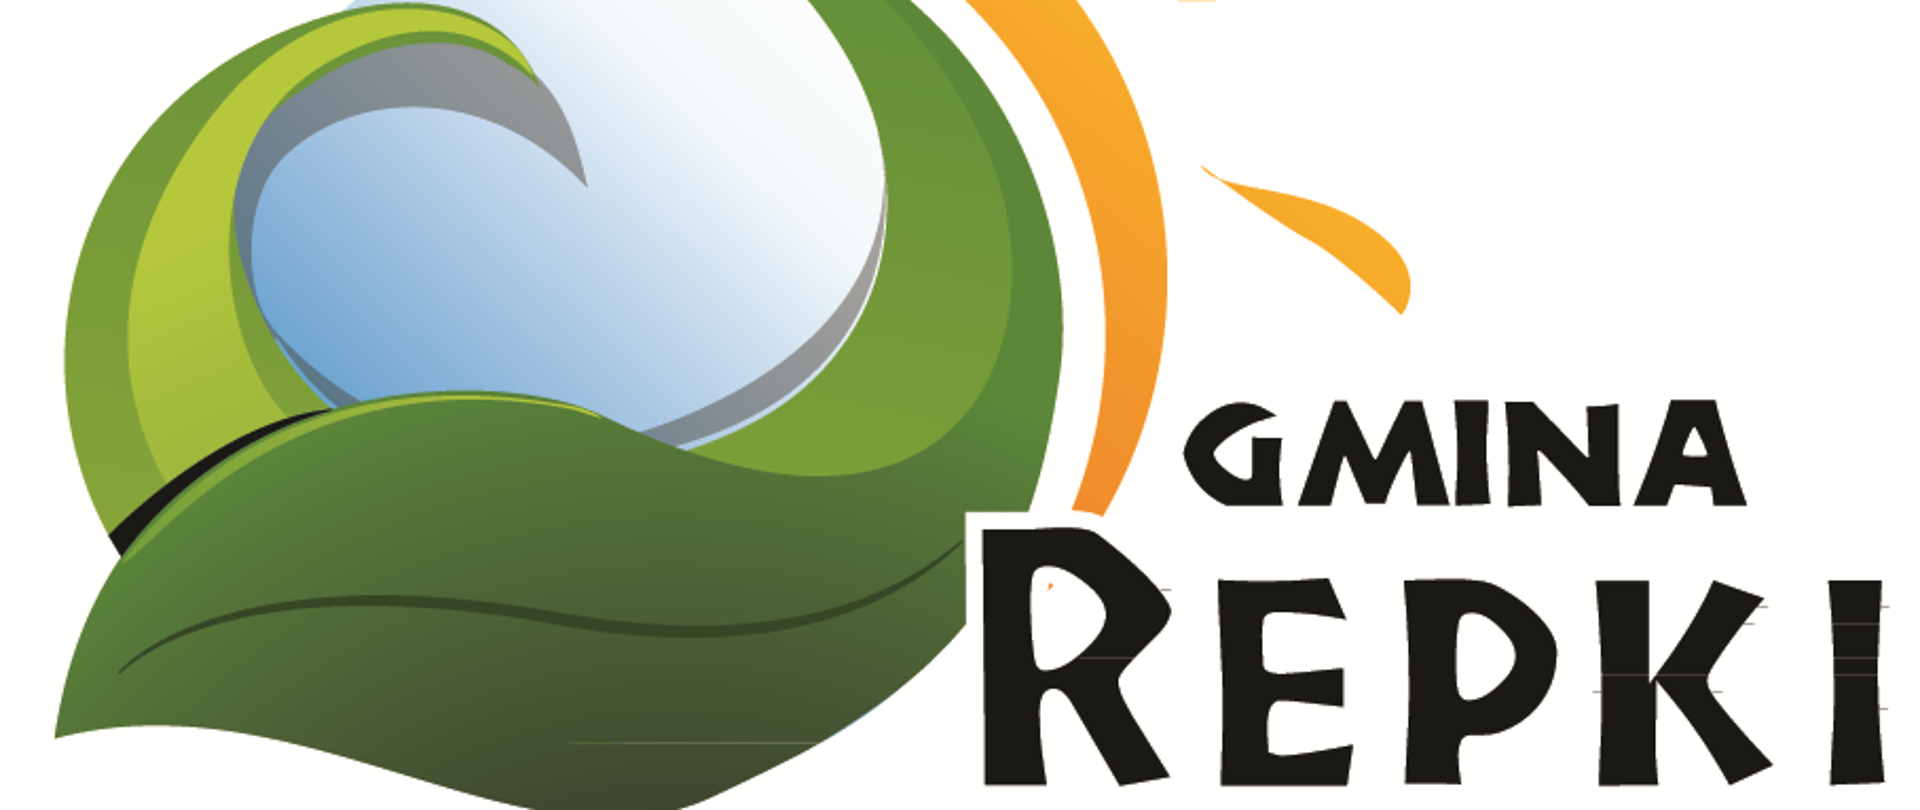 Logo Gminy Repki